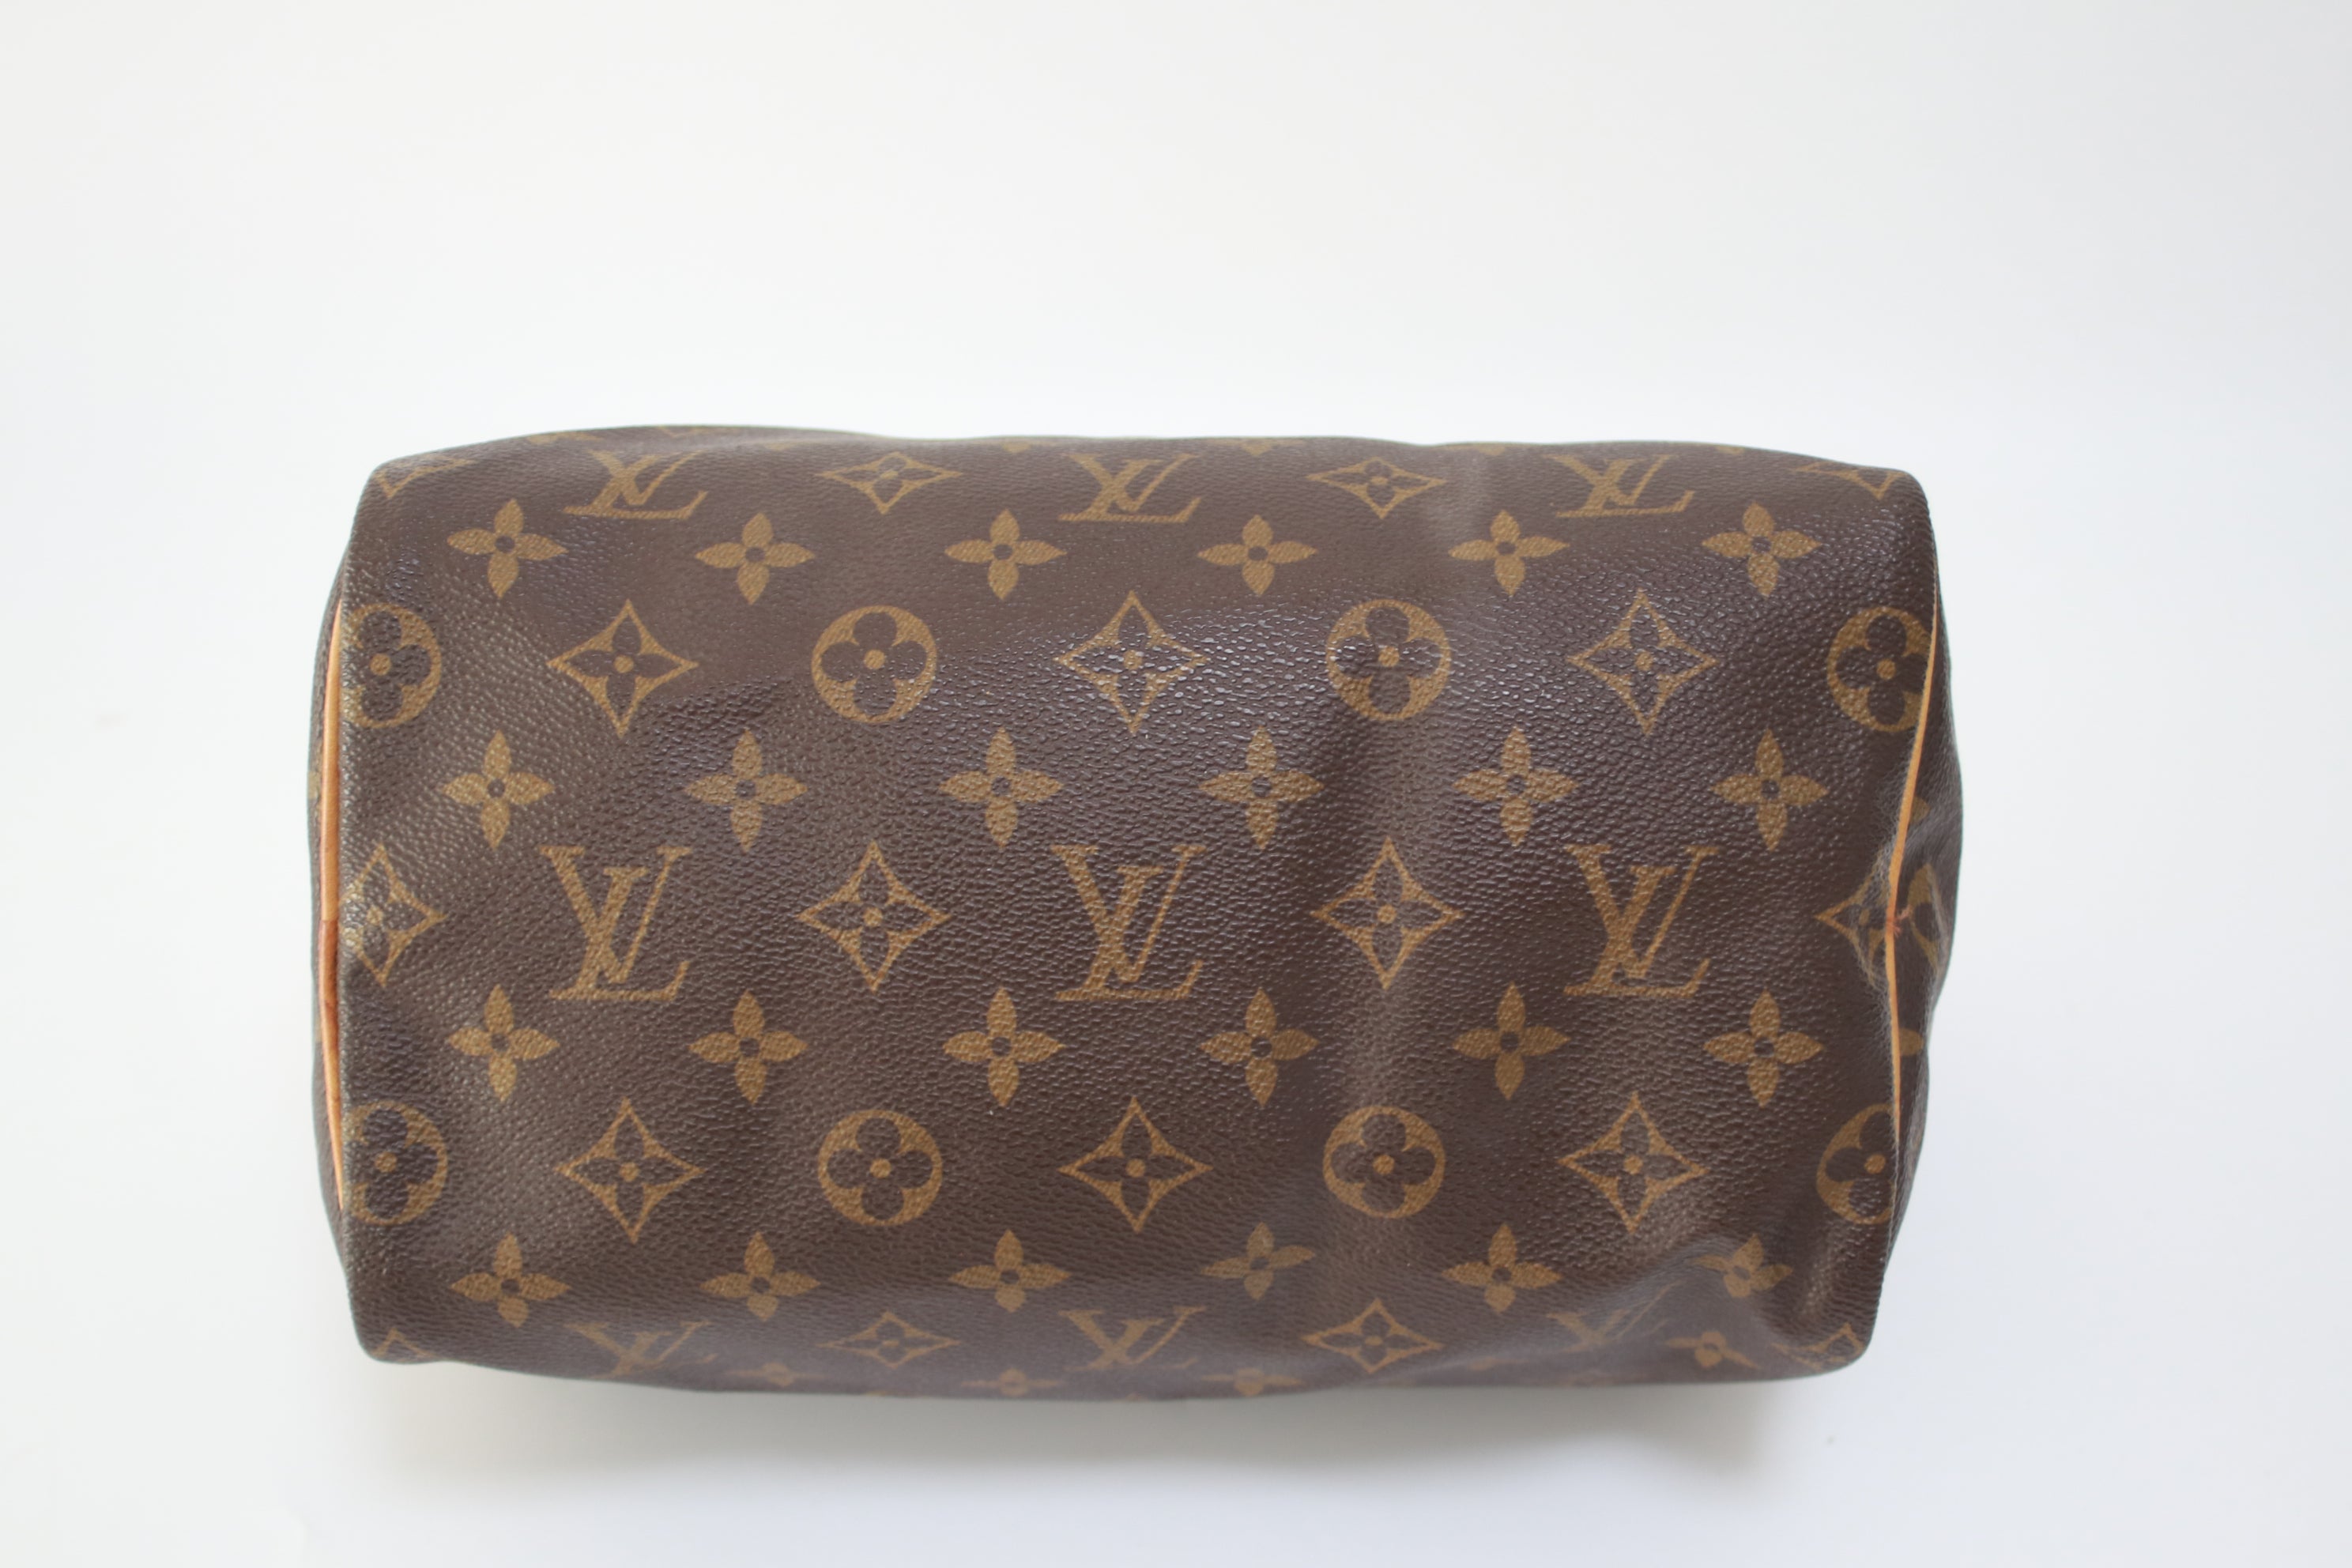 Louis Vuitton Speedy 25 Handbag Used (6241)